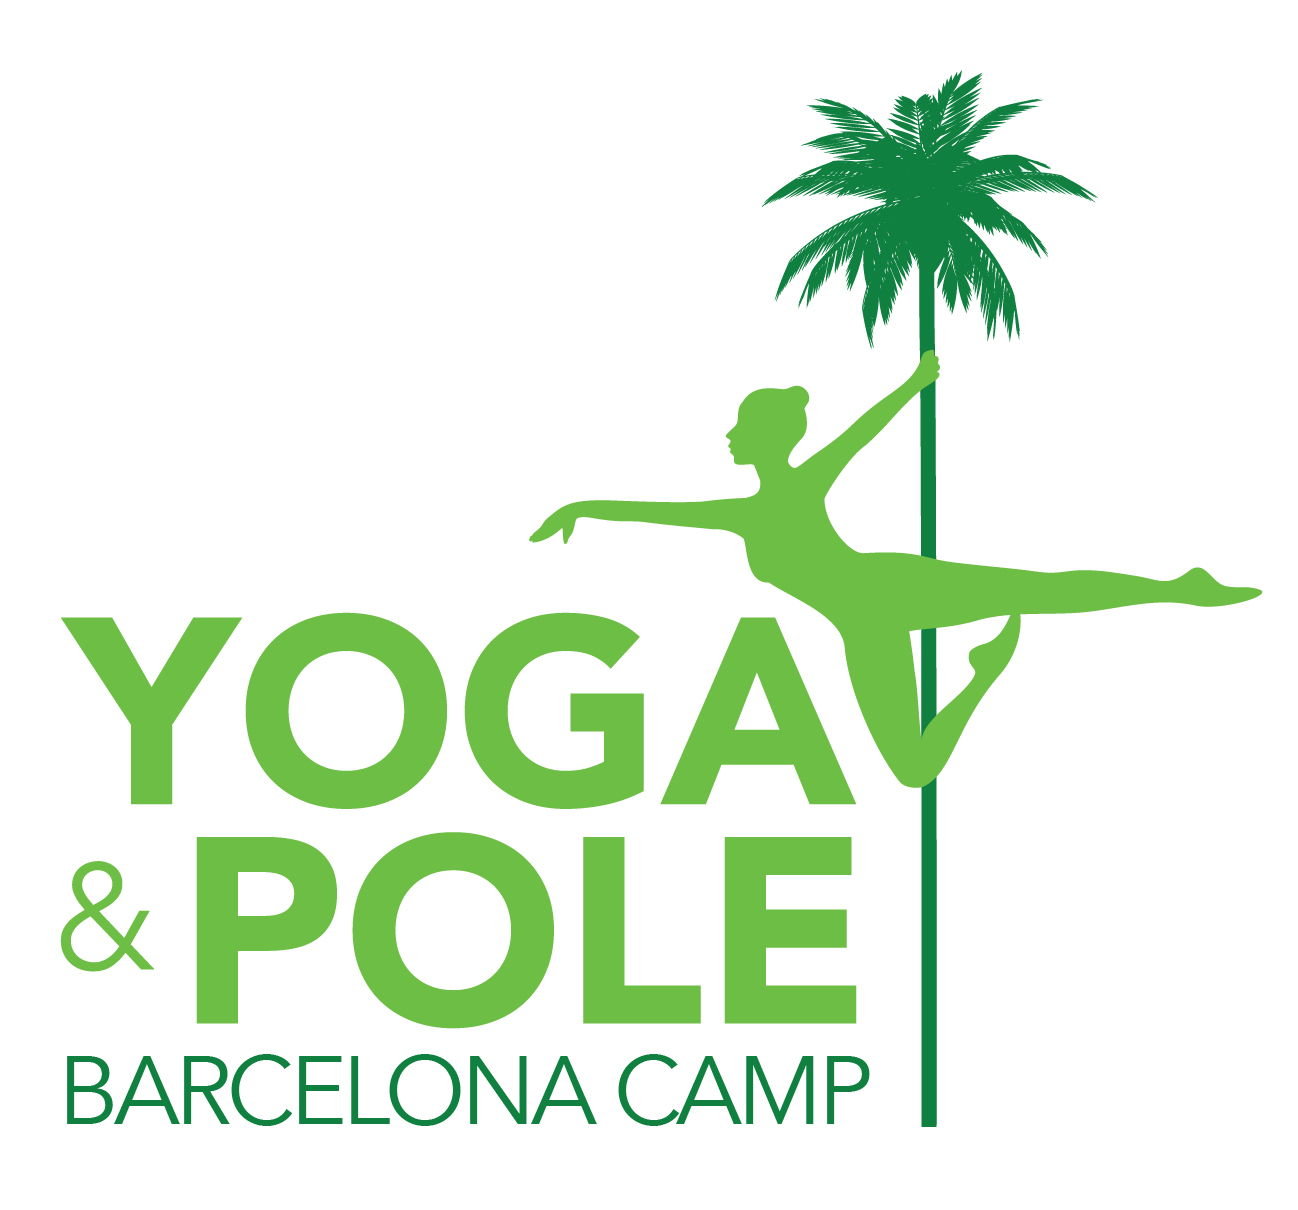 Barcelona urban pole dancing & yoga retreat